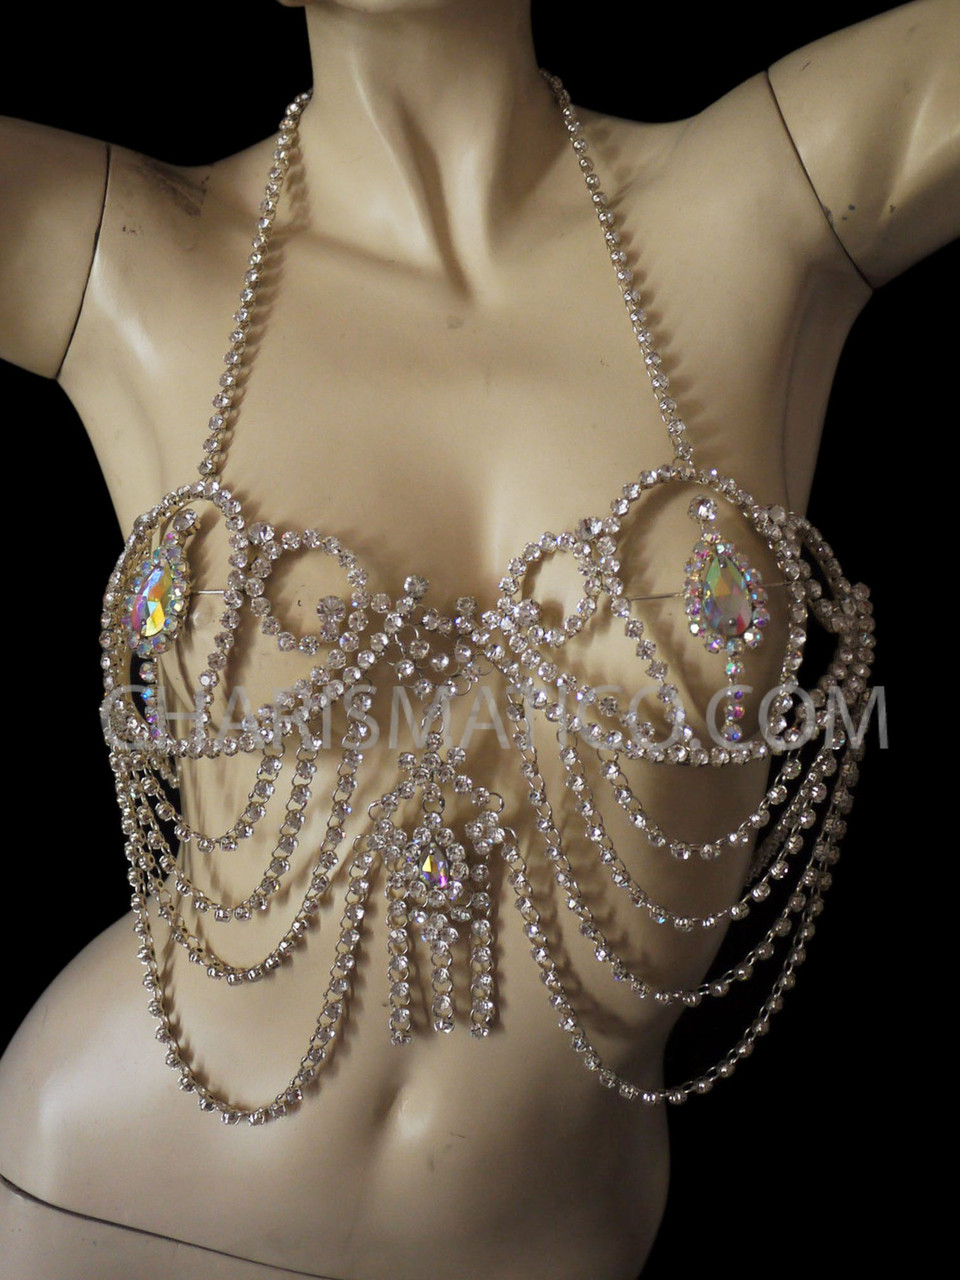 Iridescent Crystal Burlesque Body Rhinestone Showgirl'S Bra And Belt Thong